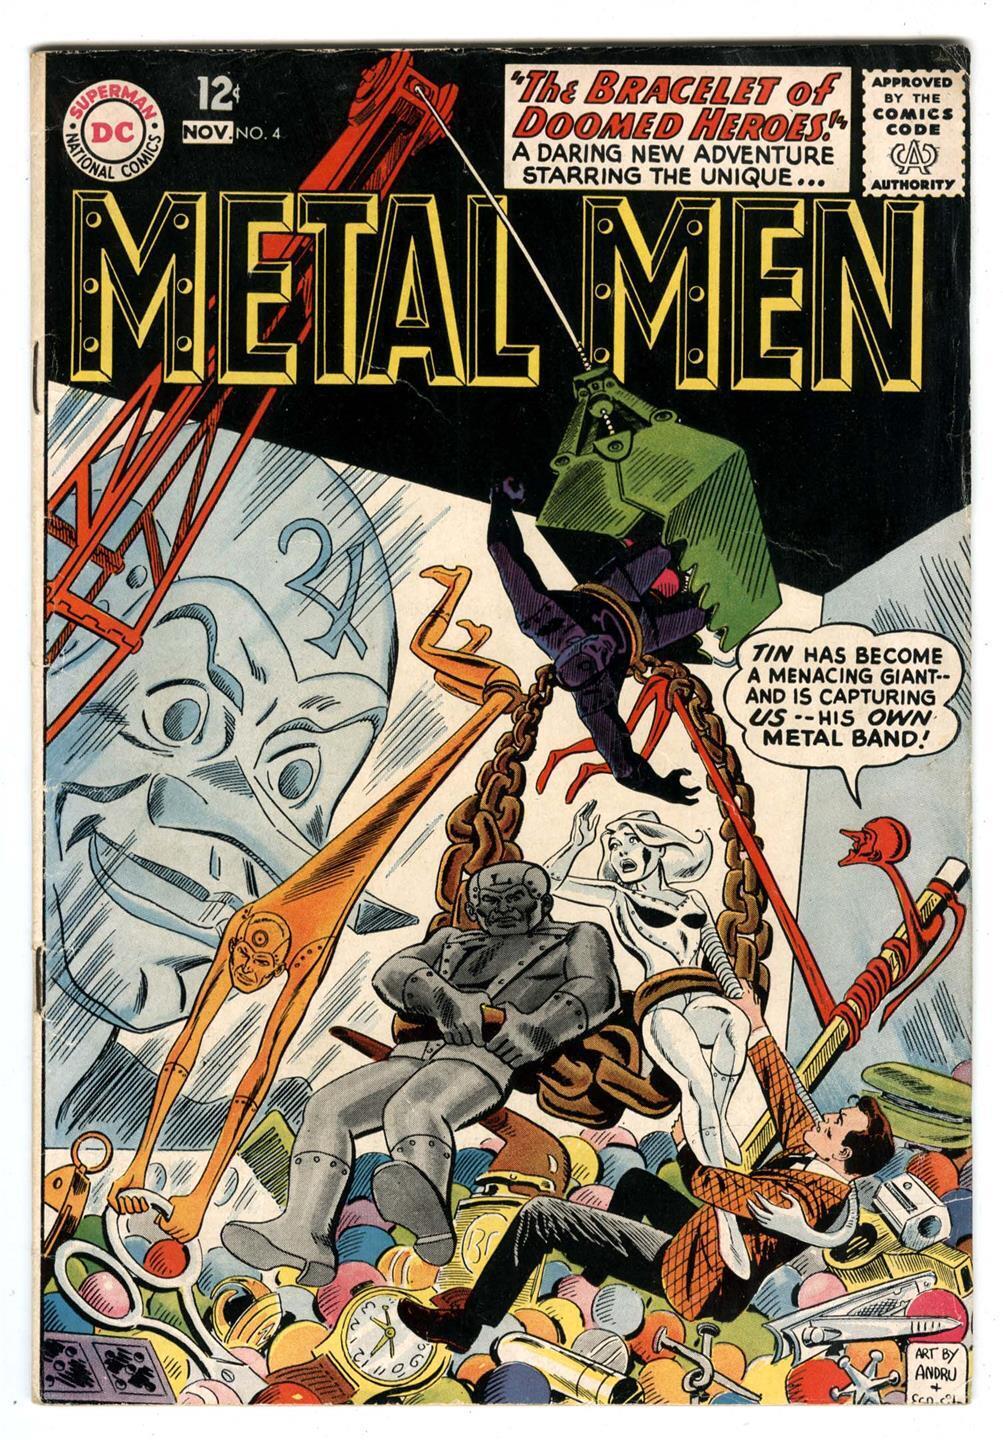 Metal Men #4 Nov 1963 TV Animated Show Coming- Classic Arcade CLAW Machine Cover